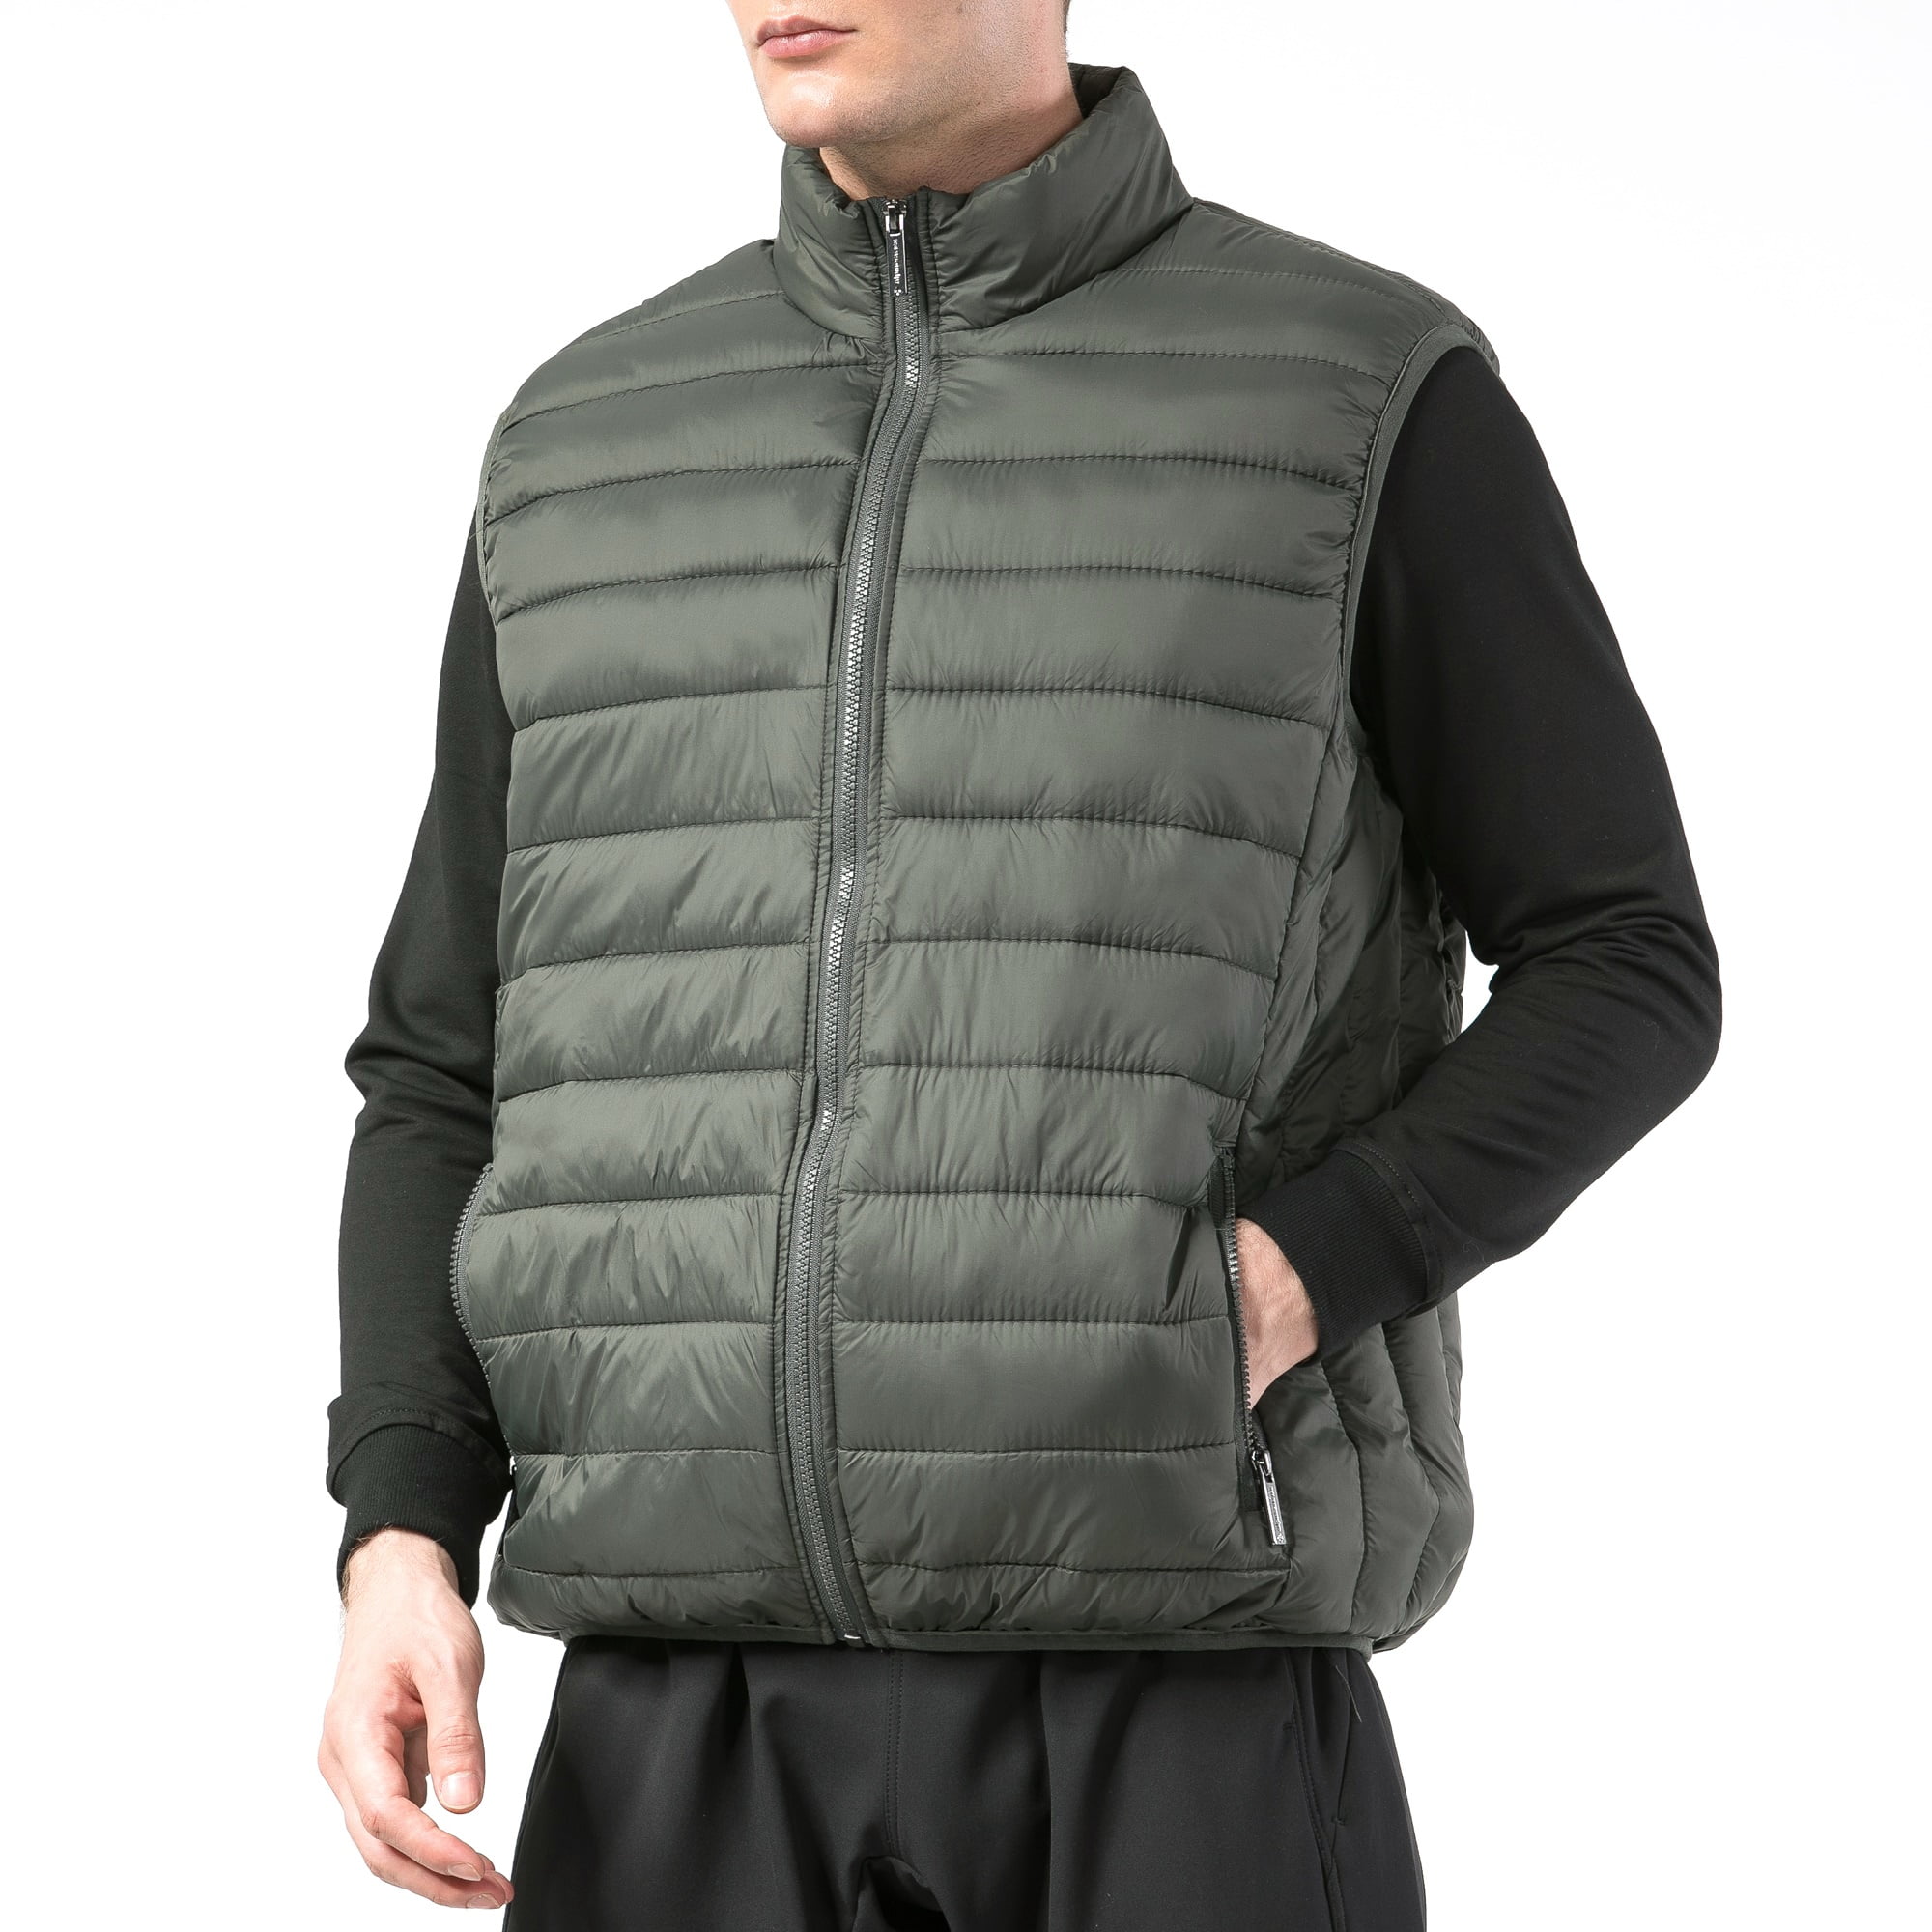 Gilet Outerwear Men's Down Vest Lightweight Packable Puffer Vest Stand Collar Zip Up Jacket Warm Outdoor Padded Puffer Vest Stylish Color : Black, Size : Medium 